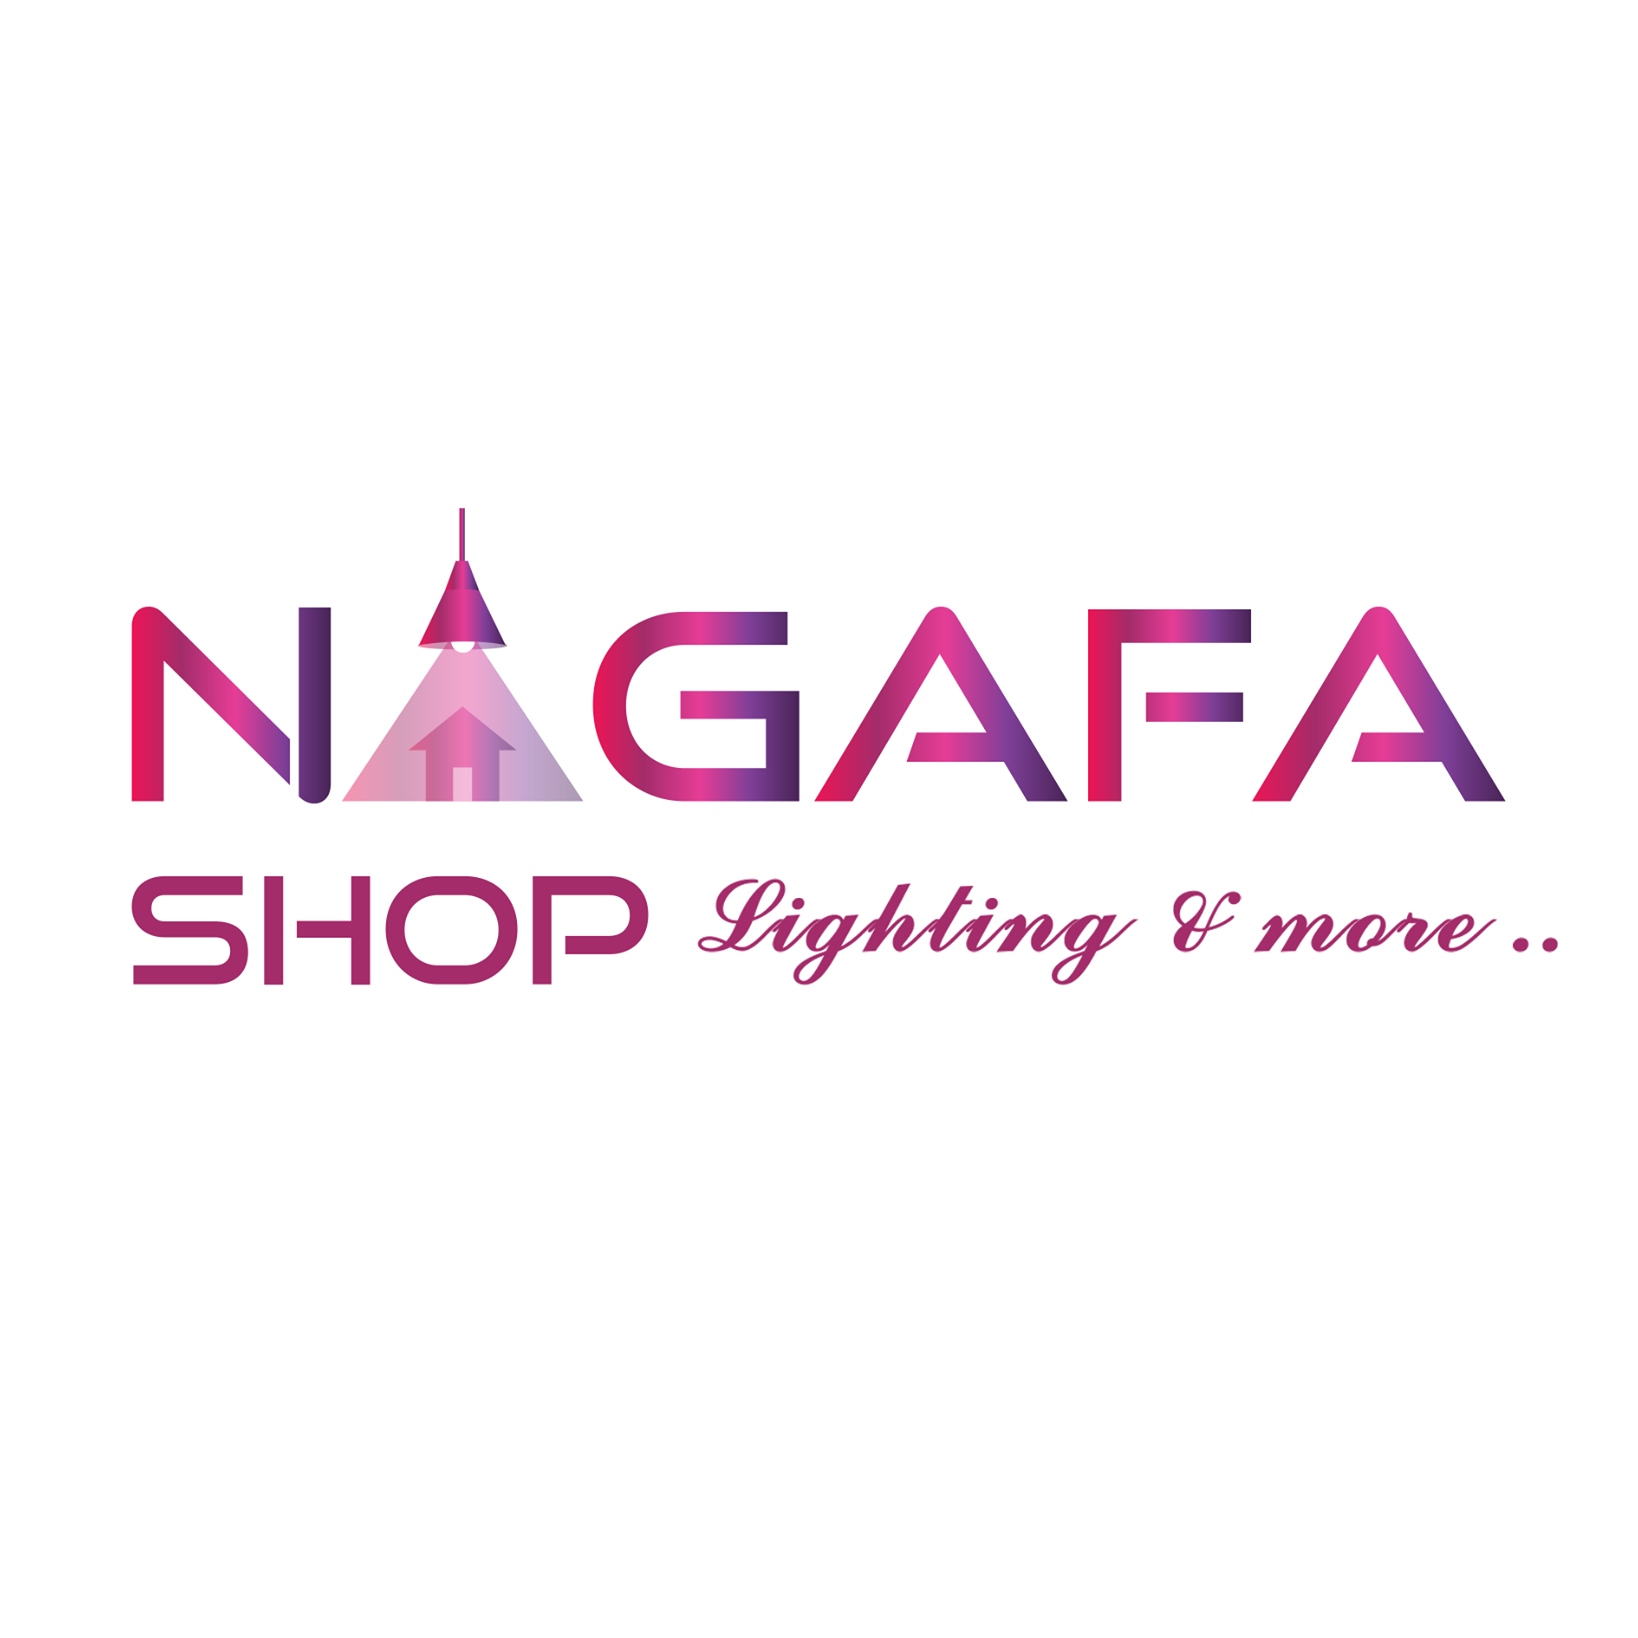 نجفة شوب Nagafa Shop